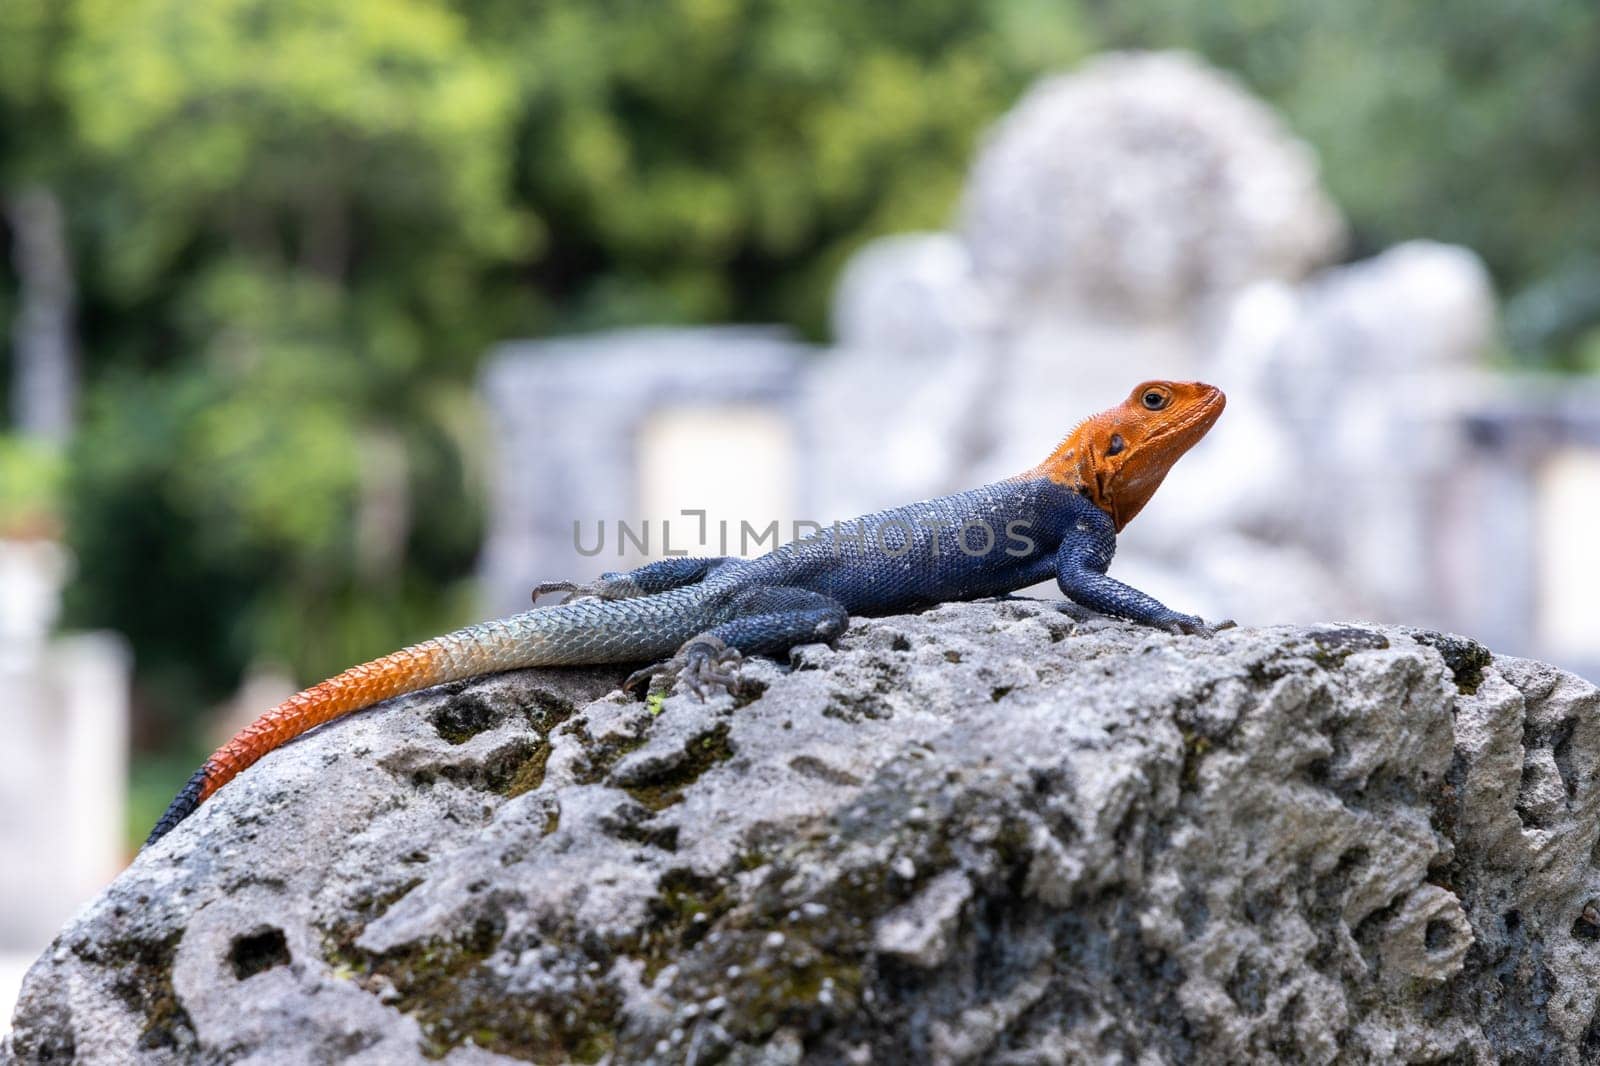 Southern rock agama lizard sitting on rock, a blue, red and orange lizard. by Khosro1